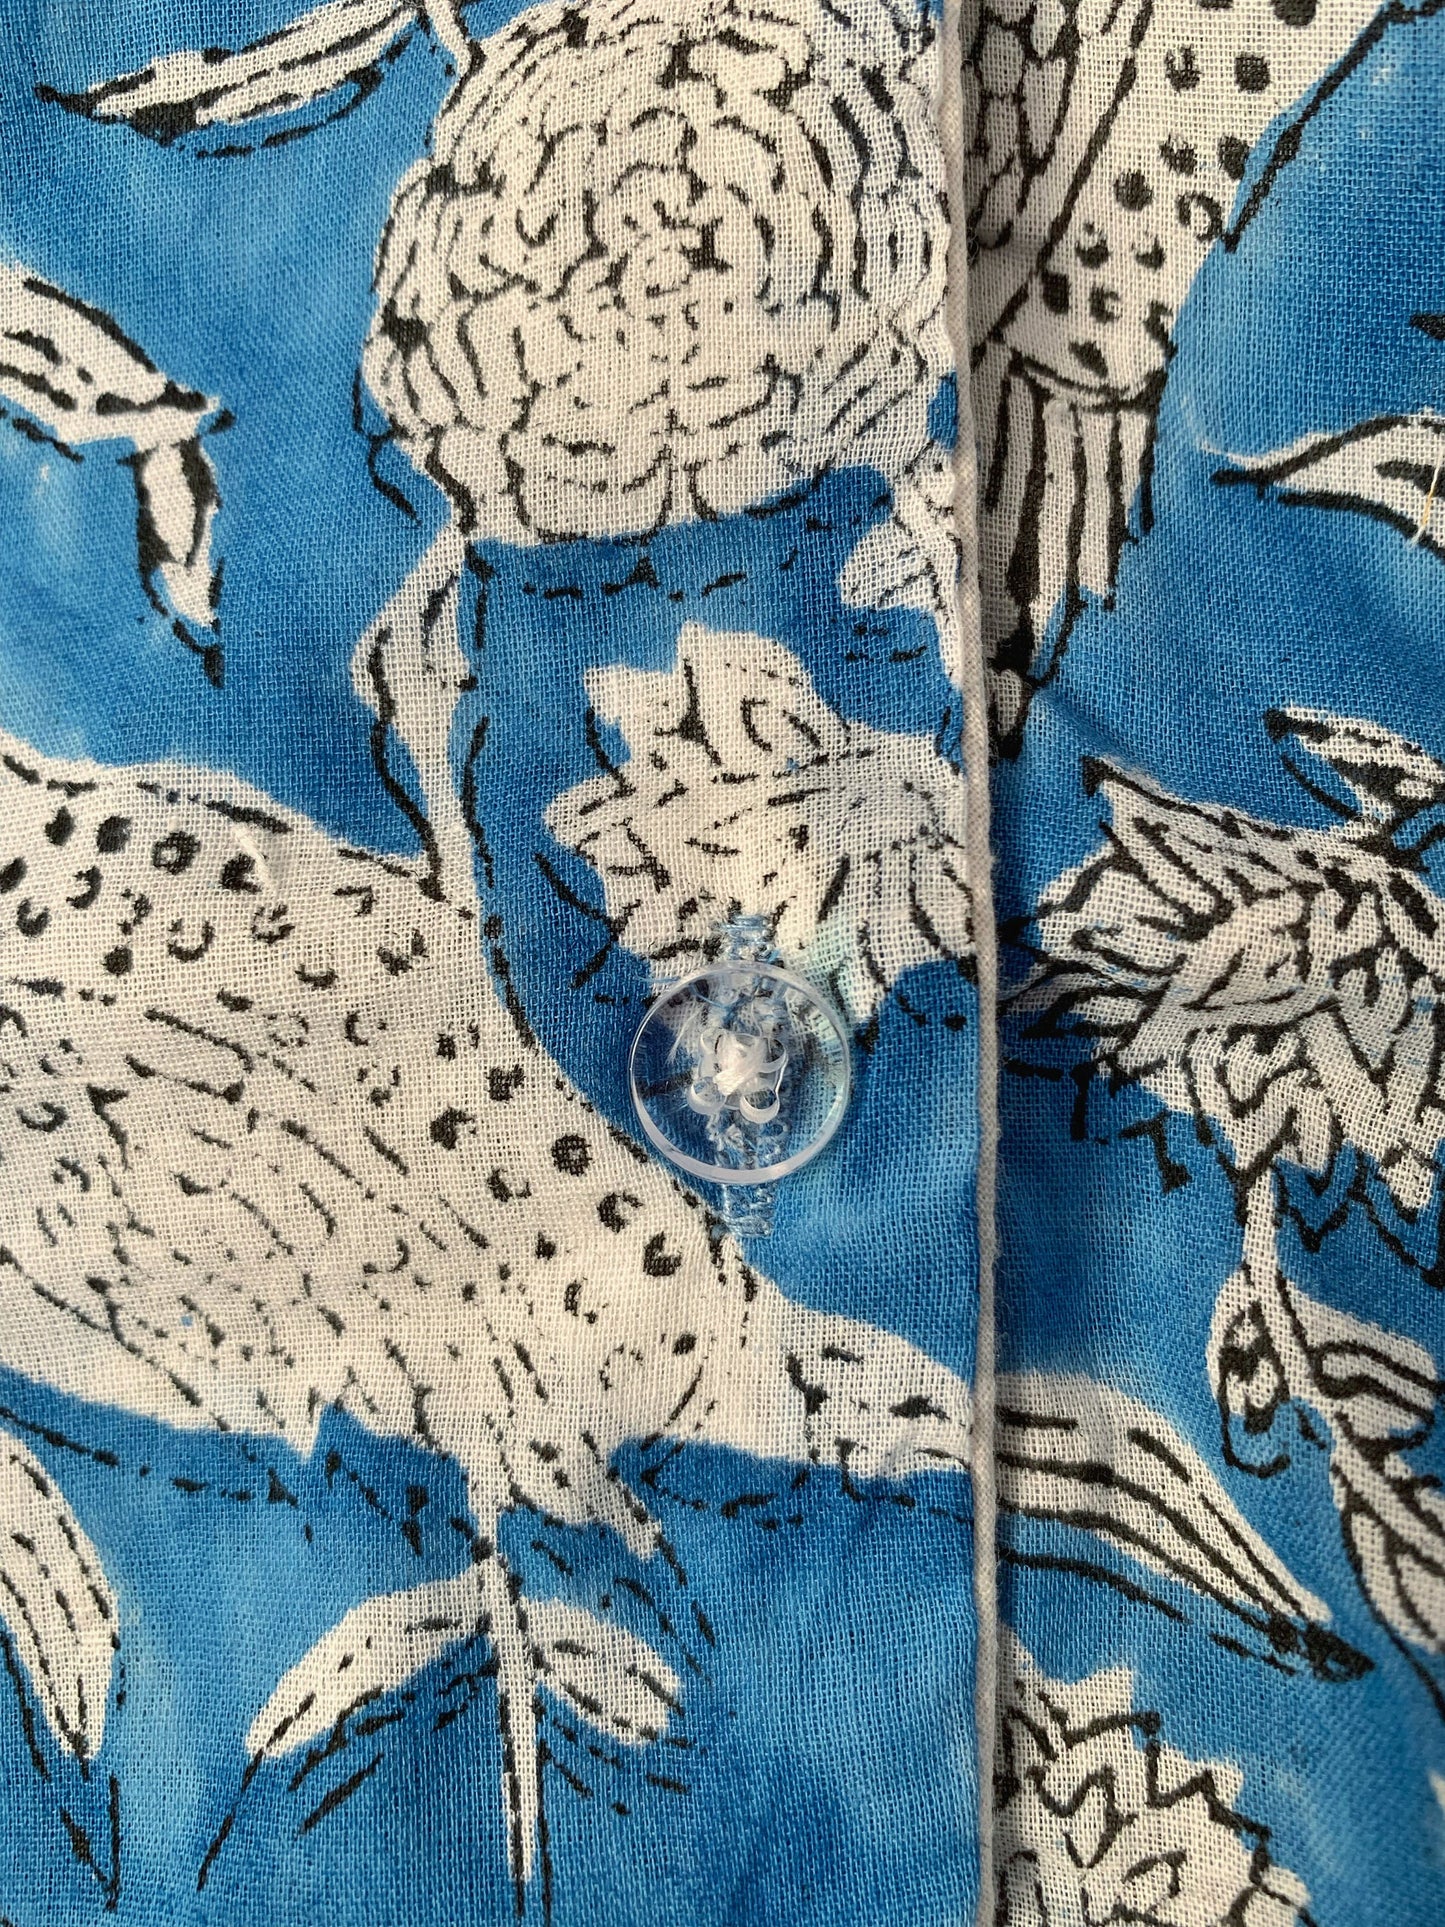 Short-sleeved pajamas · Pure cotton block print artisanal in India · 100% cotton summer pajamas · Blue white flowers